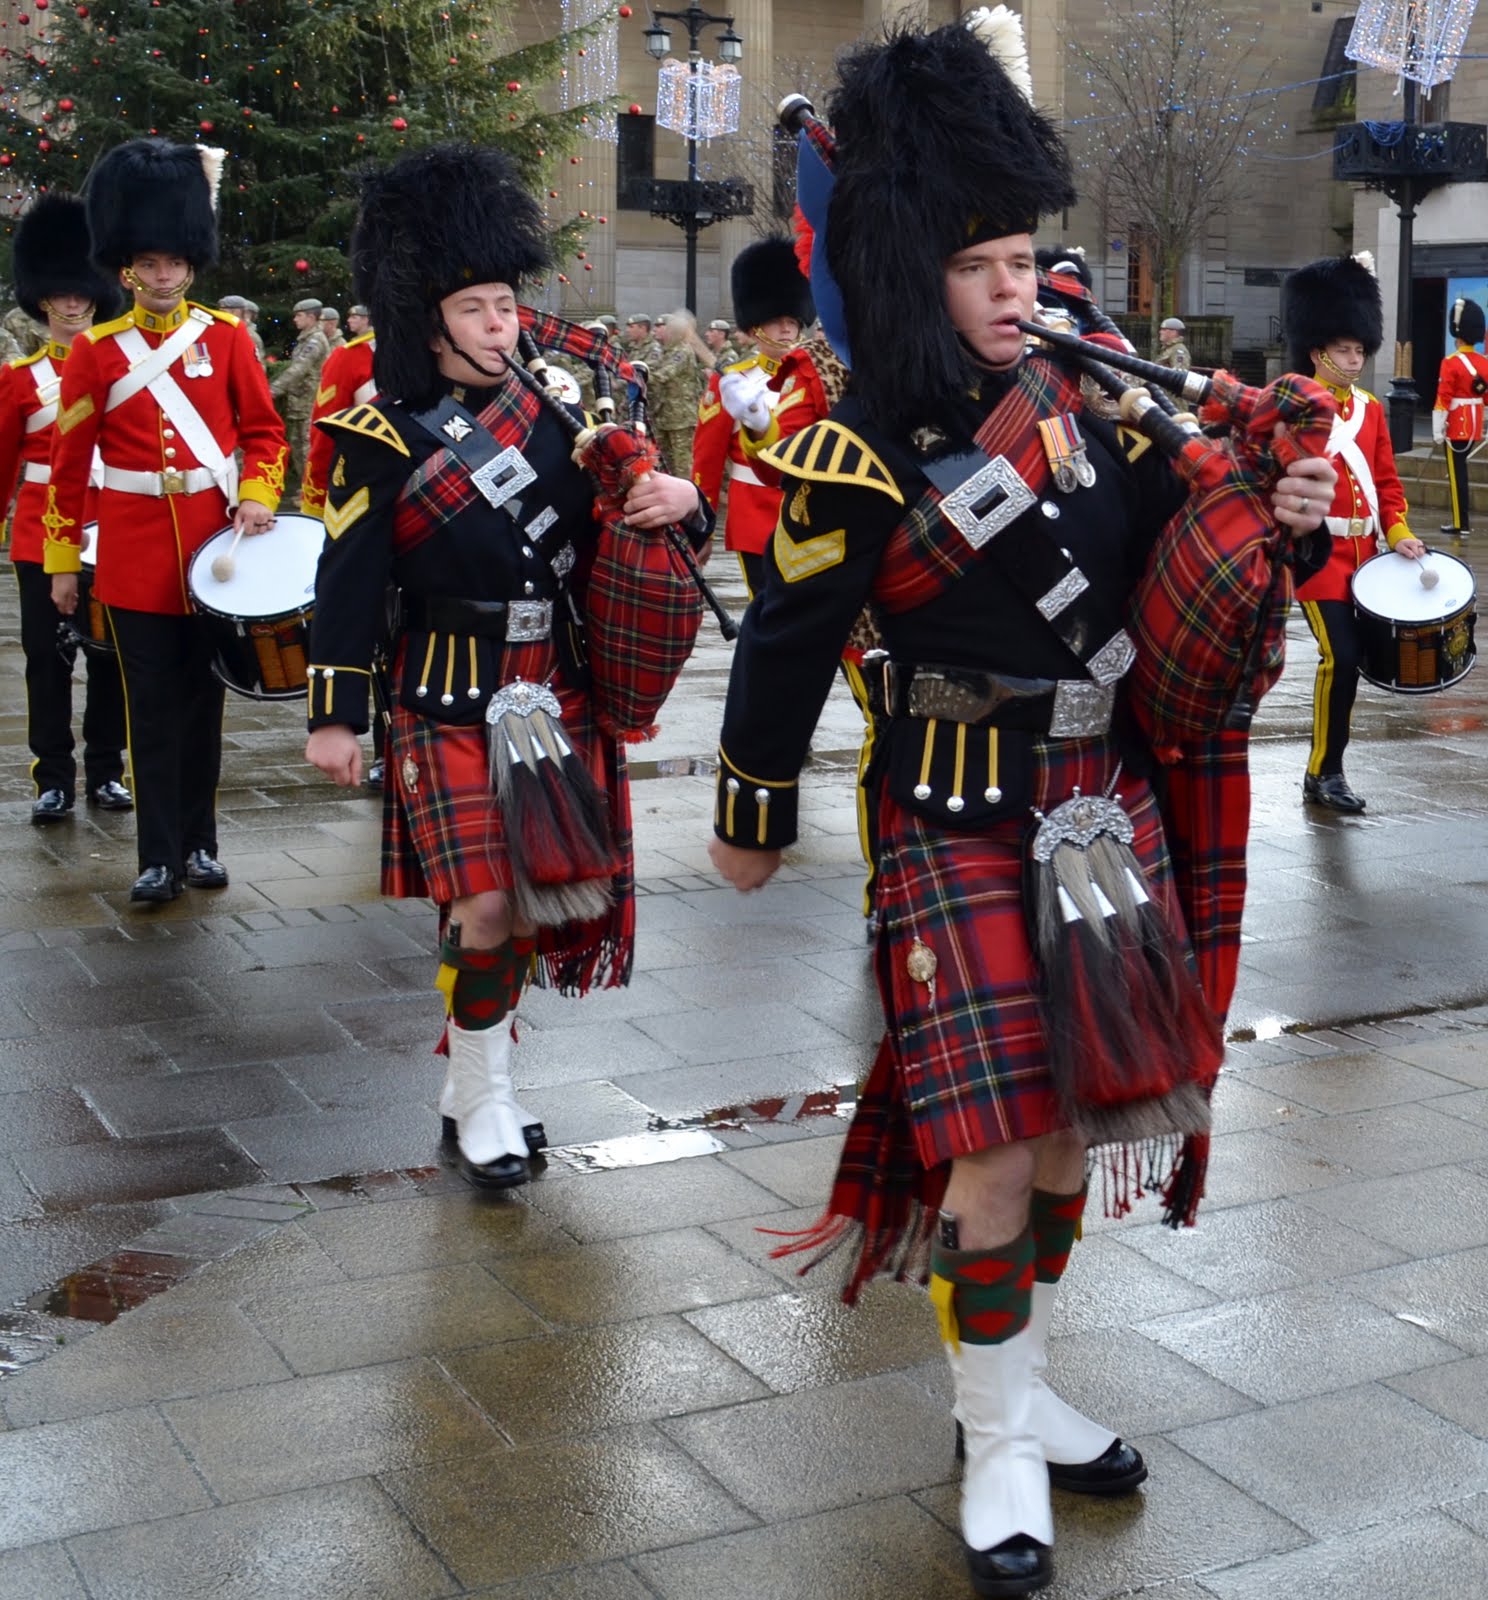 Tour Scotland: Tour Scotland Photograph And Video Pipe Band Royal Scots ...